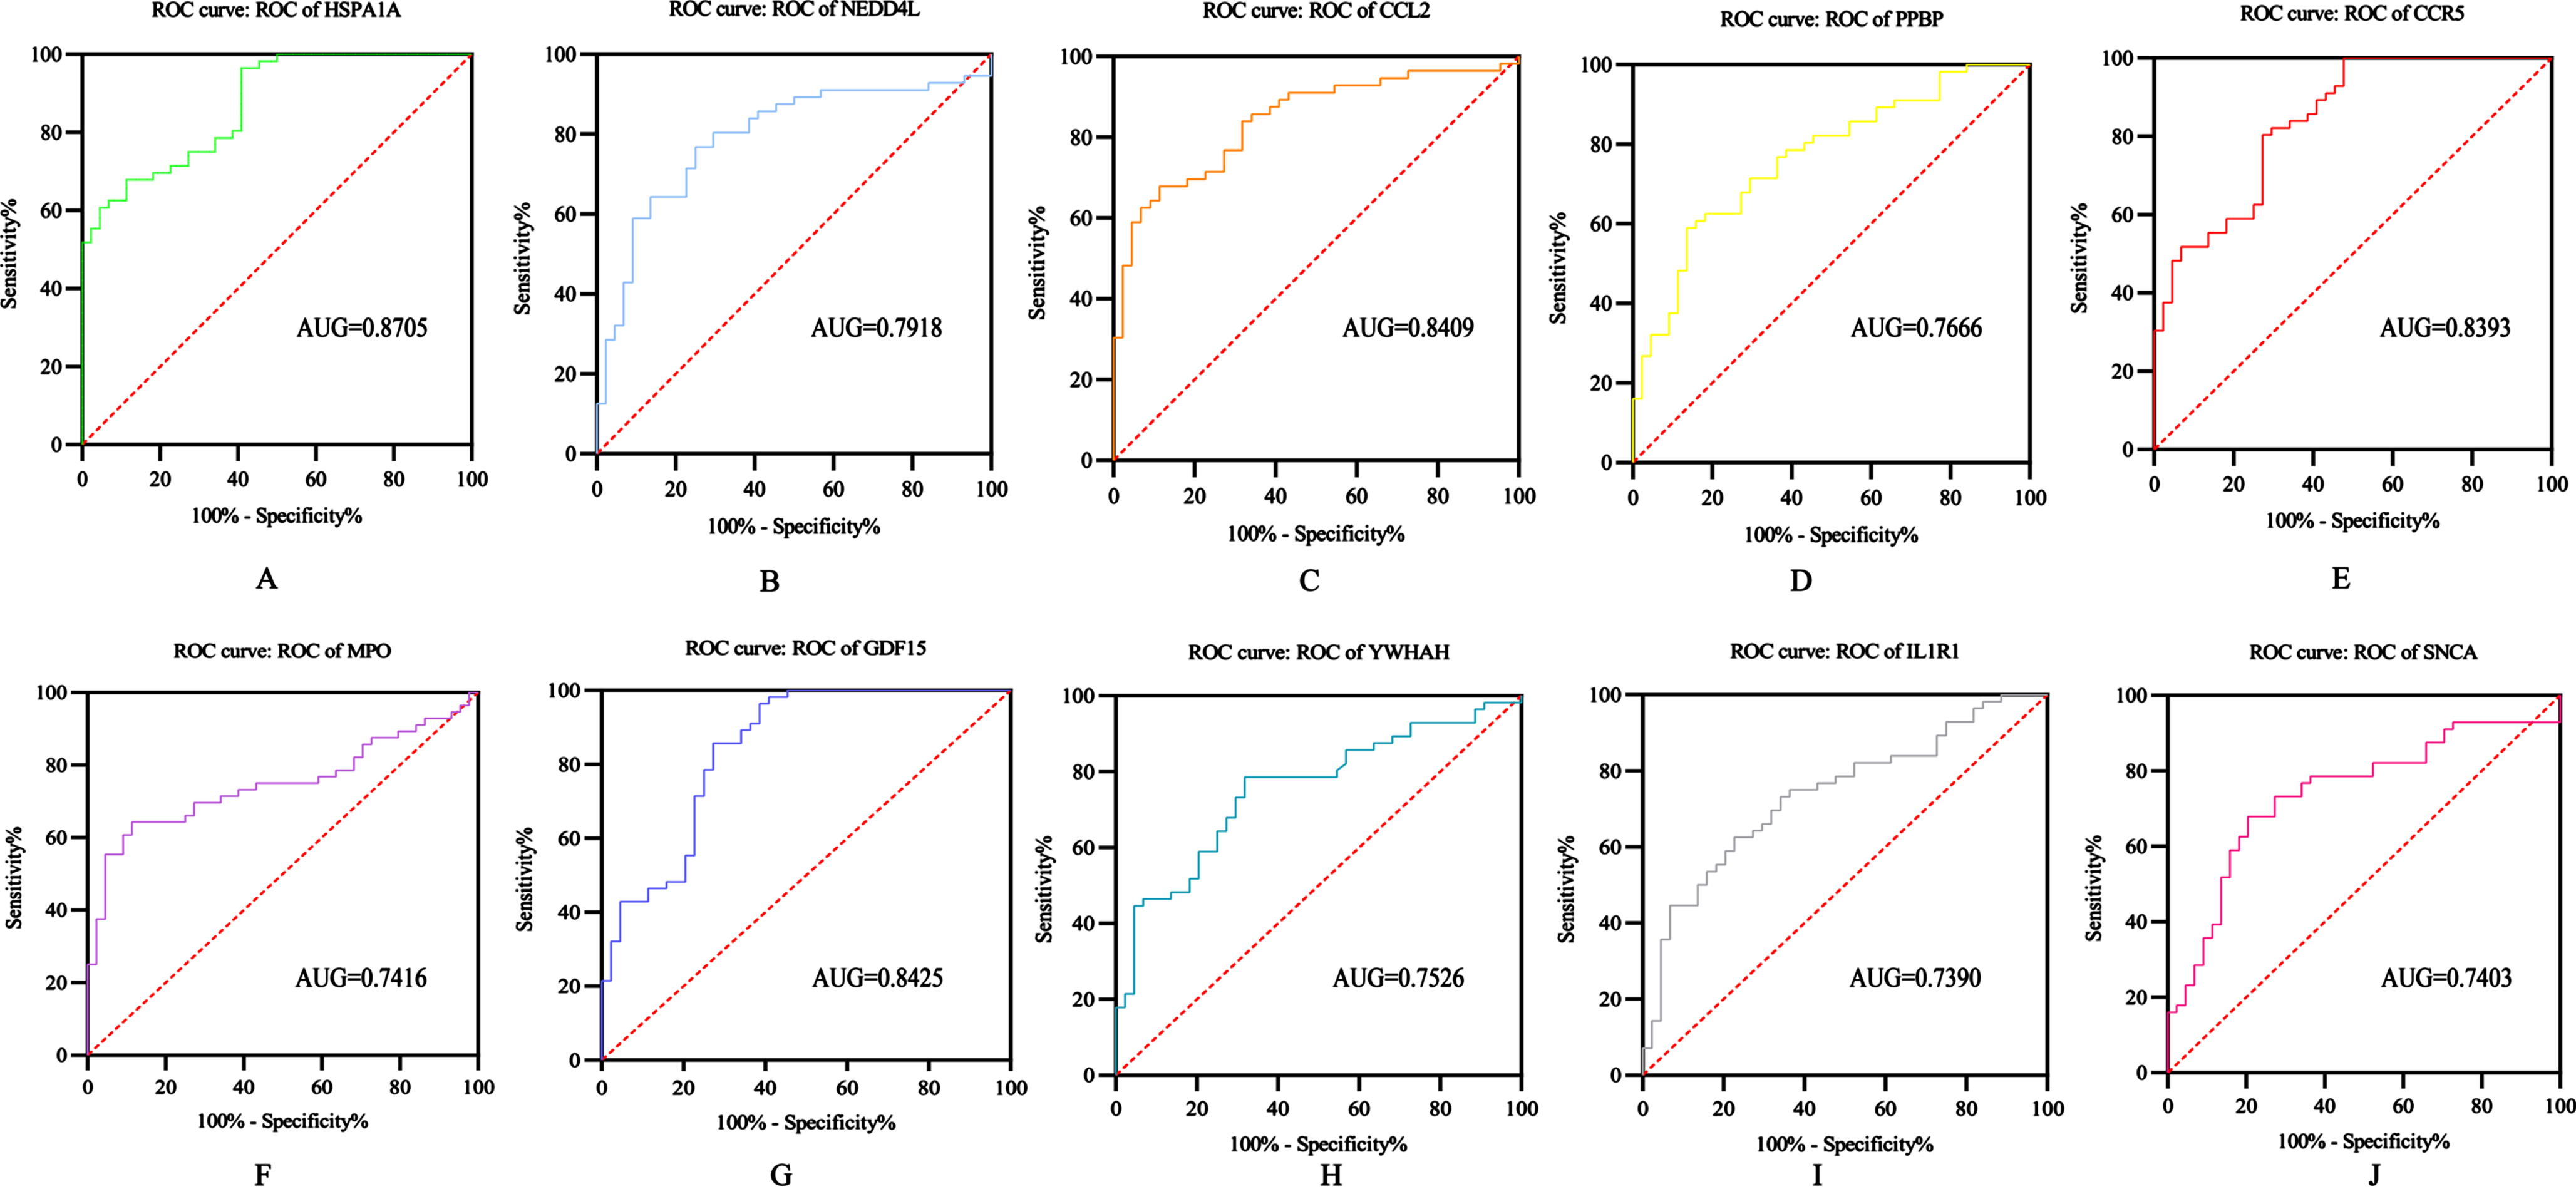 ROC analysis of HUB gene: A) HSPA1A; B) NEDD4L; C) CCL2; D) PPBP; E) CCR5; F) MPO; G) GDF15; H) YWHAH; I) IL1R1; J) SNCA.